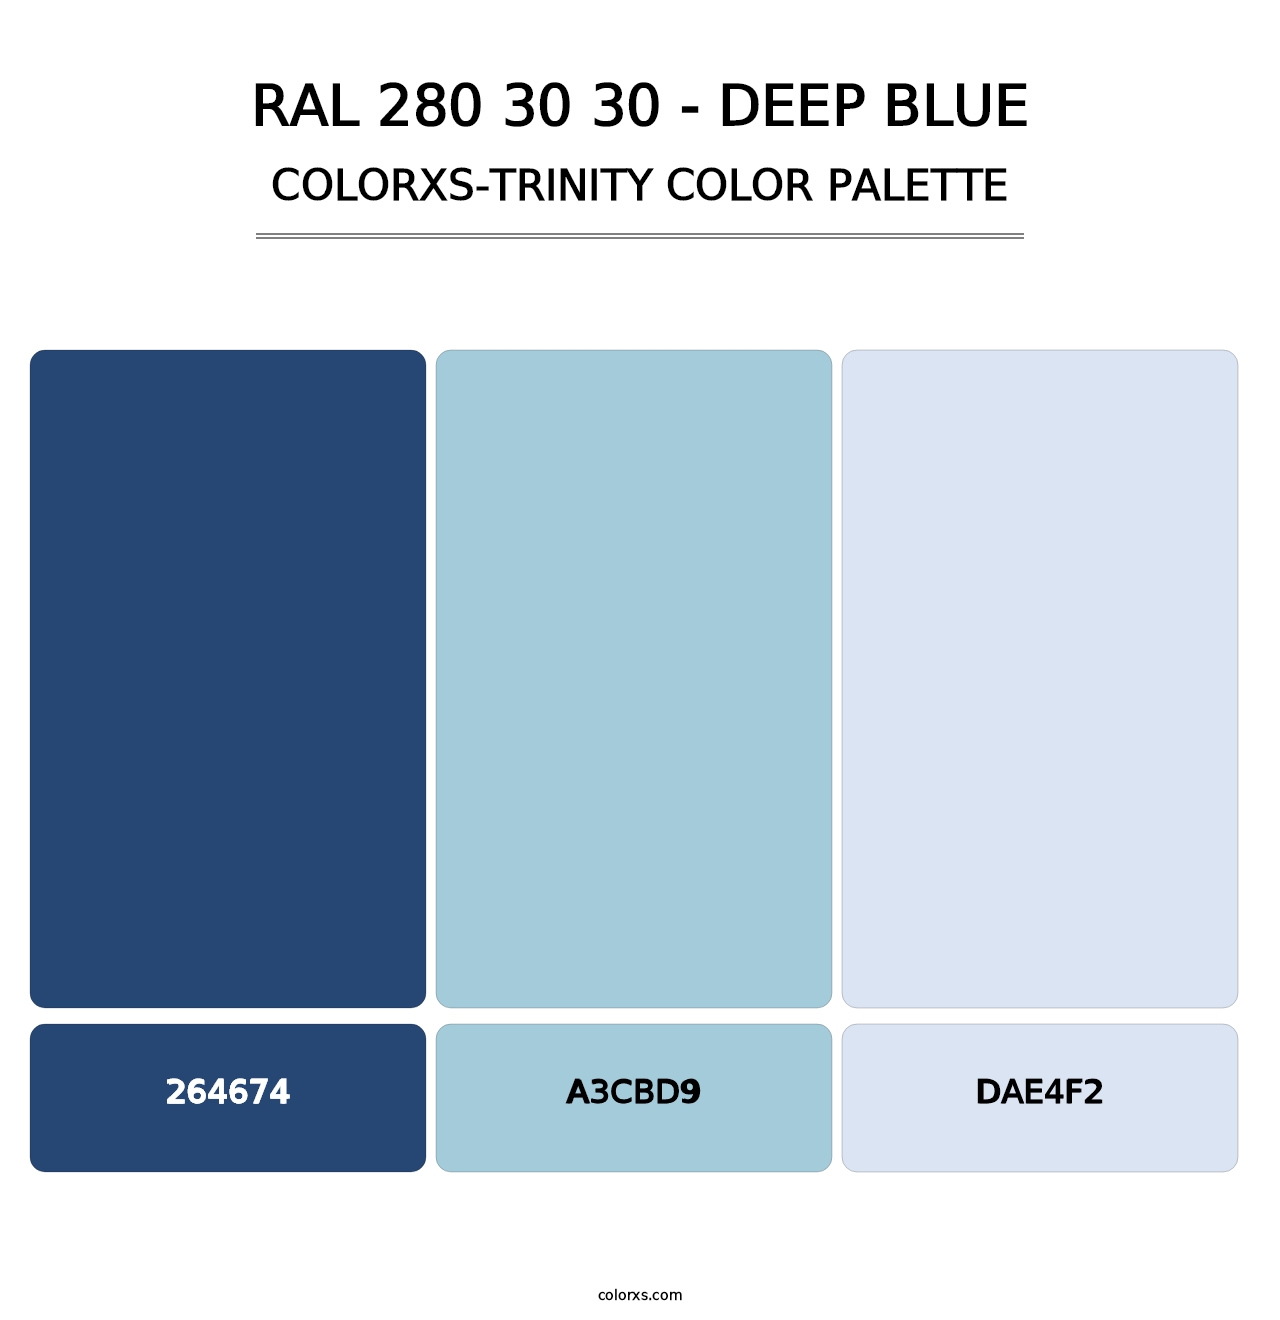 RAL 280 30 30 - Deep Blue - Colorxs Trinity Palette